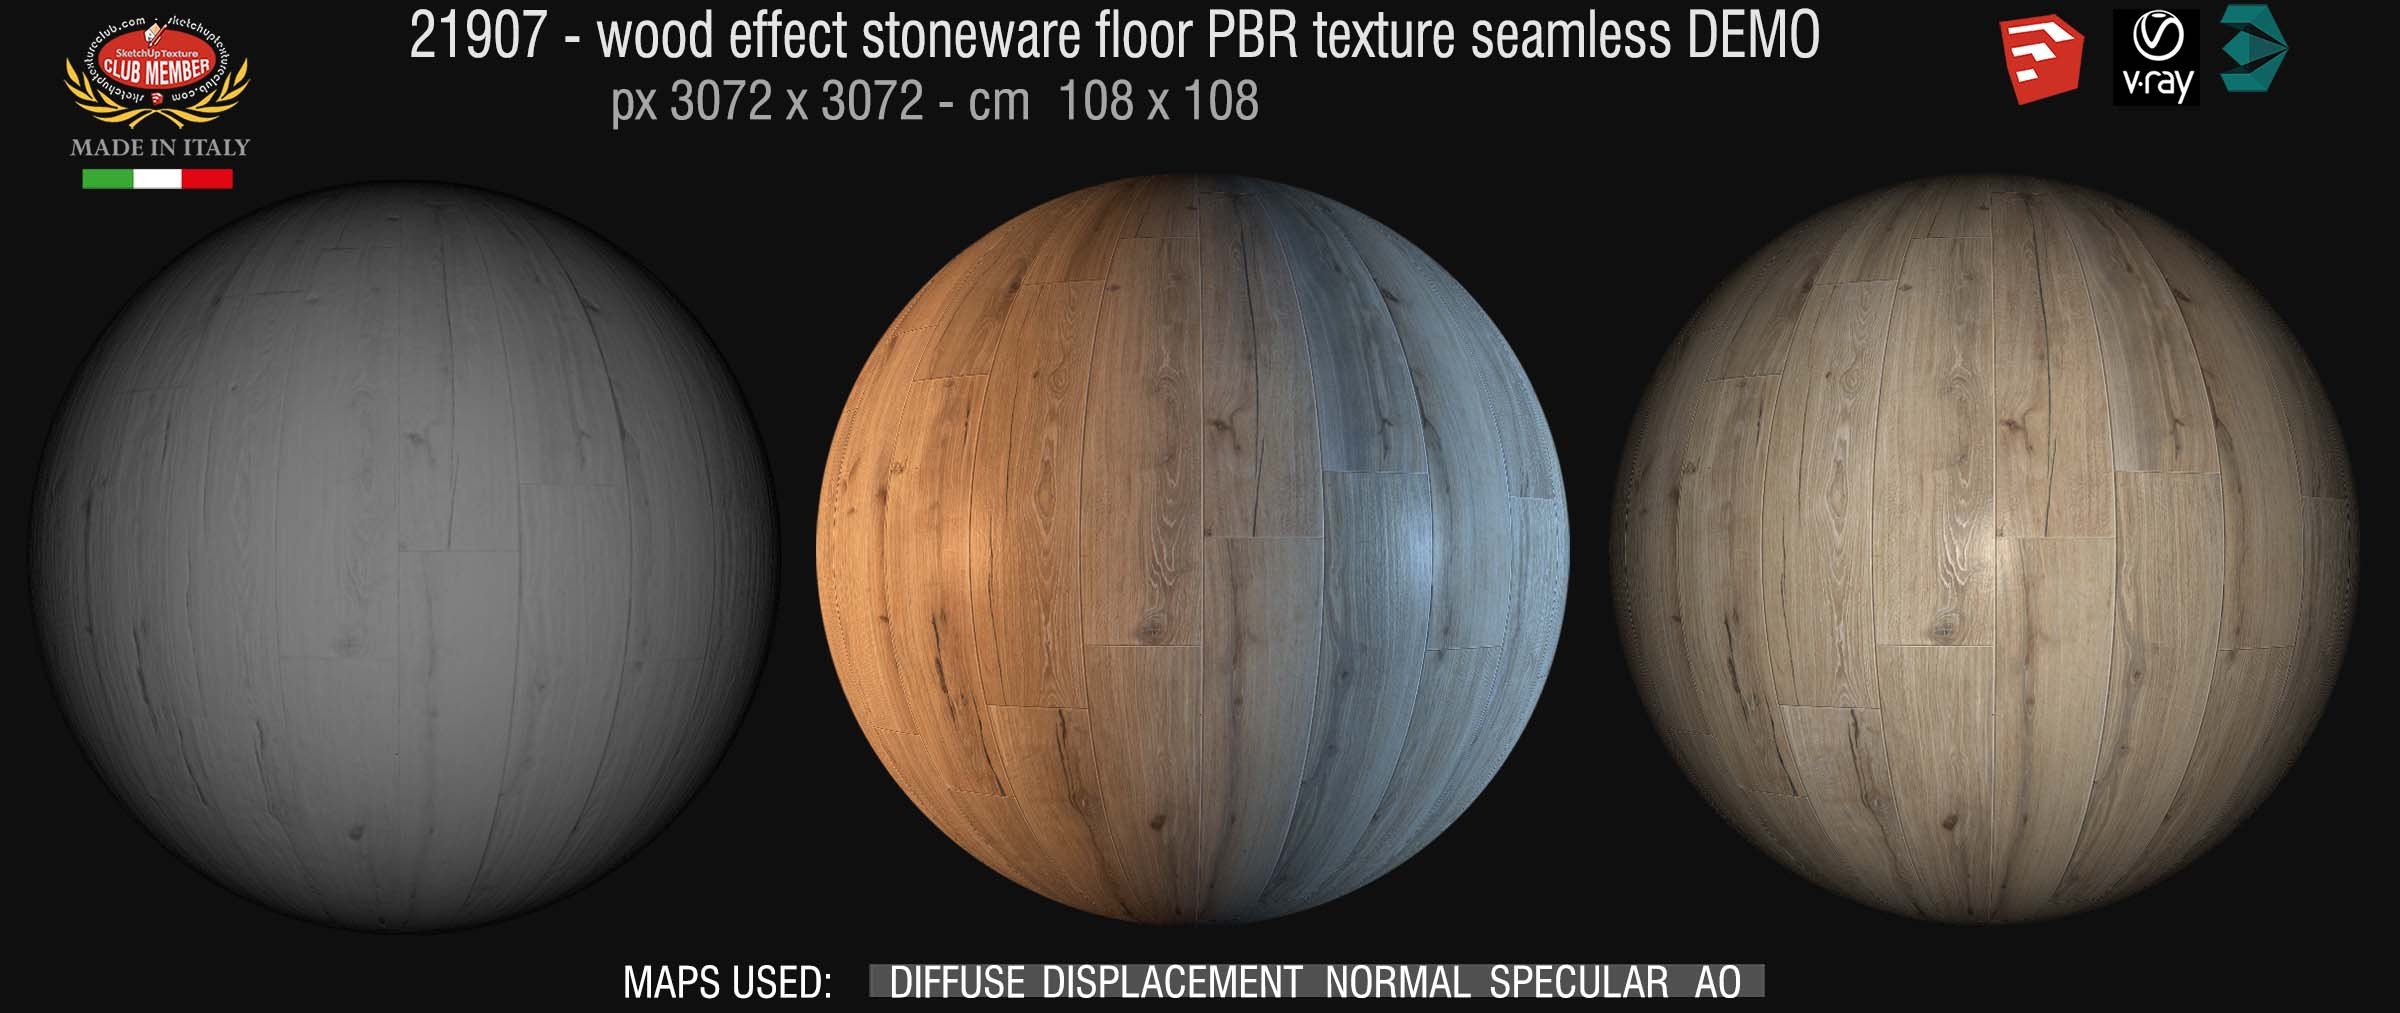 21907 wood effect stoneware floor PBR texture seamless DEMO